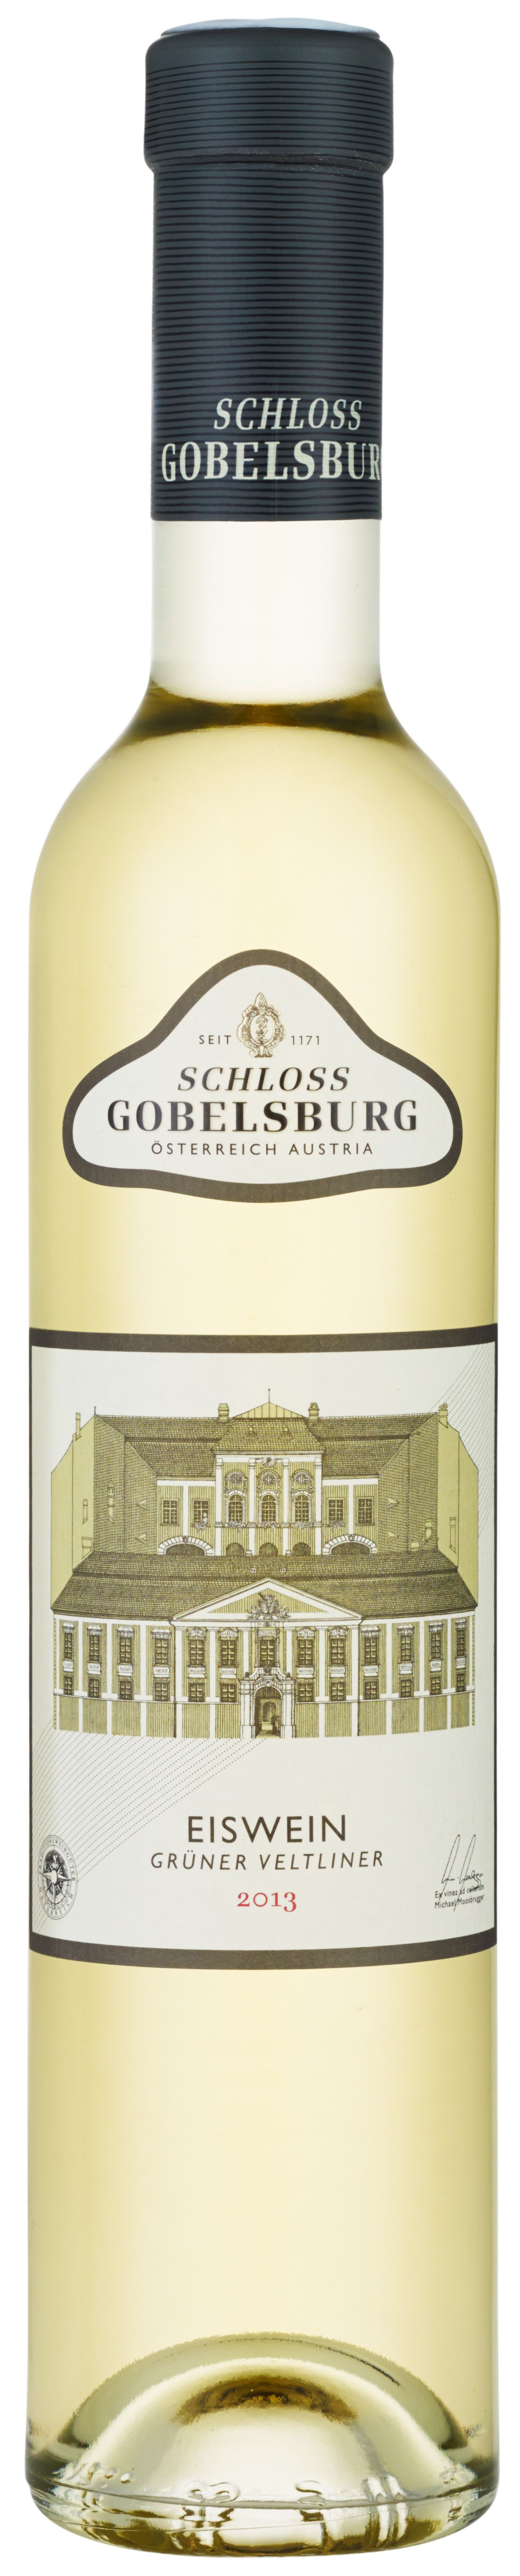 Schloss Gobelsburg, Gruner Veltliner Eiswein, 2013